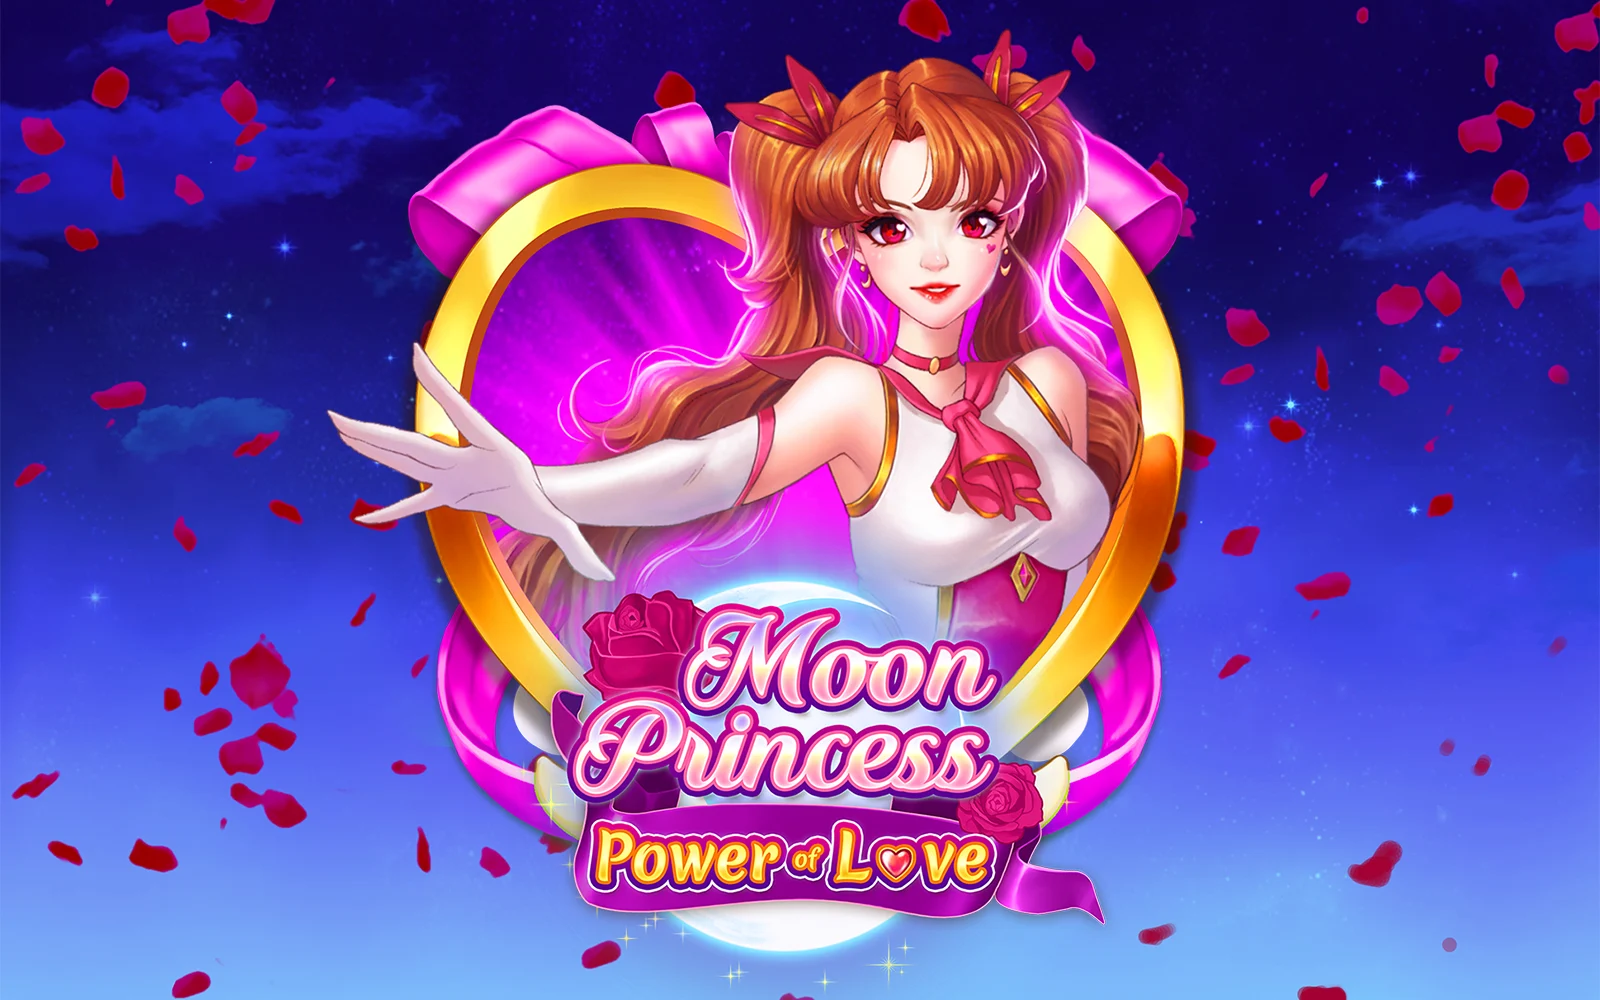 Joacă Moon Princess Power of Love în cazinoul online Starcasino.be